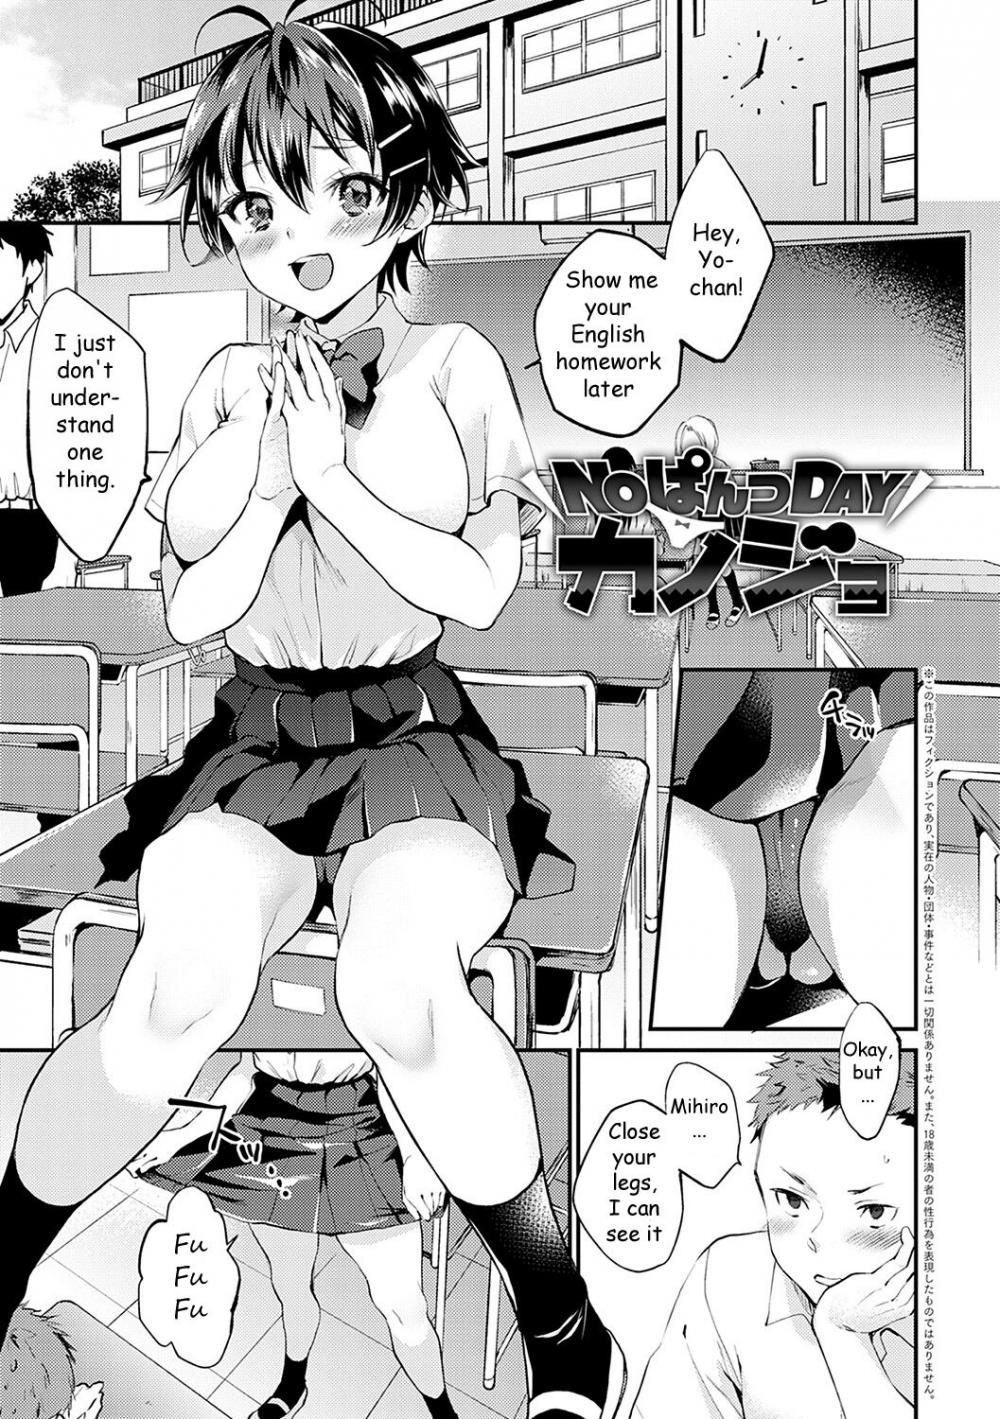 Hentai Manga Comic-No Pants Day Kanojo-Read-1